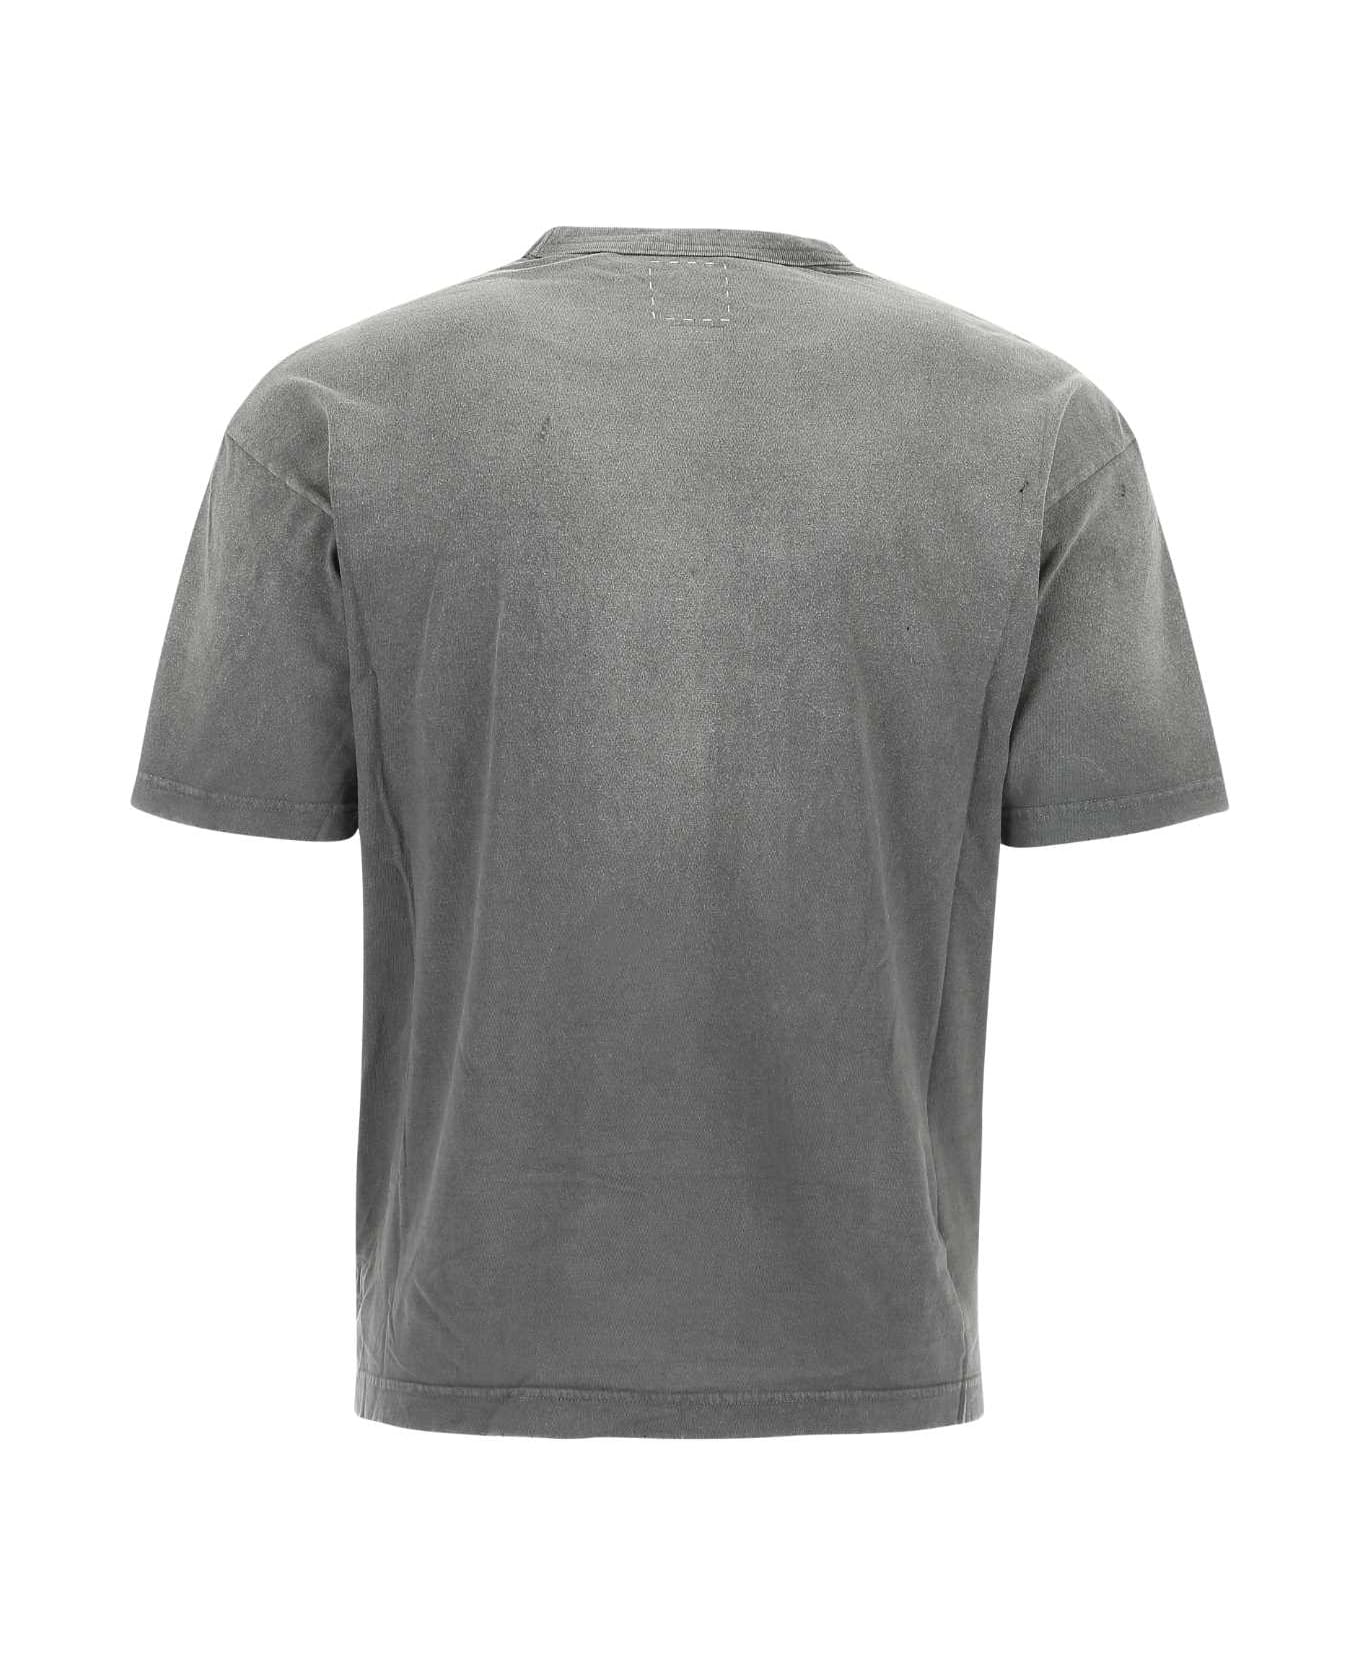 Visvim Grey Cotton T-shirt - GREY